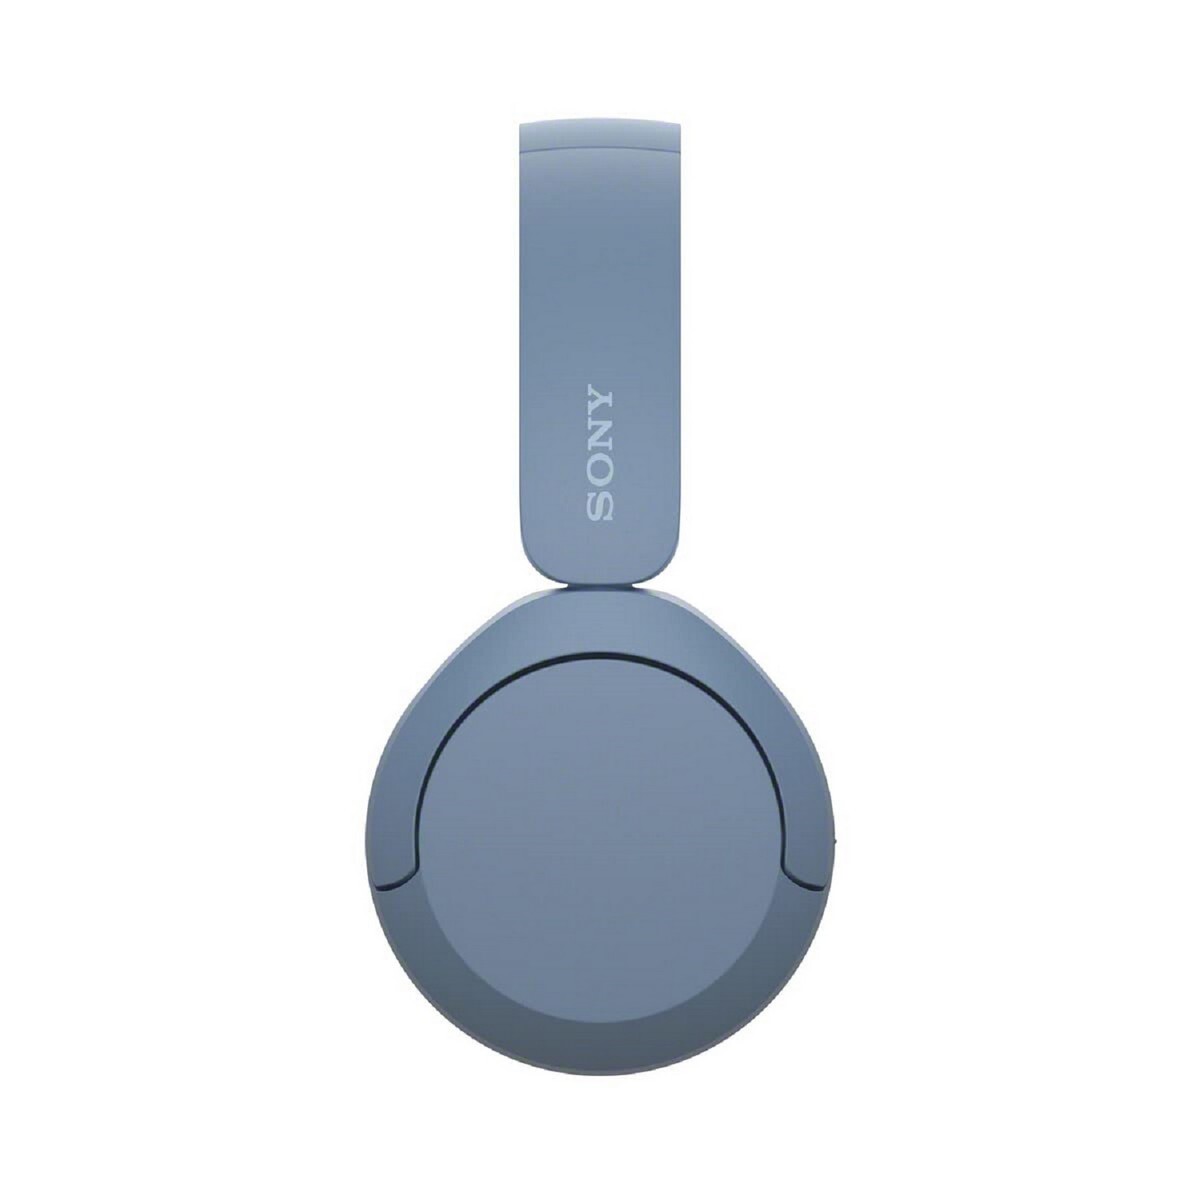 Sony Wireless Bluetooth Headphone WH-CH520 Blue